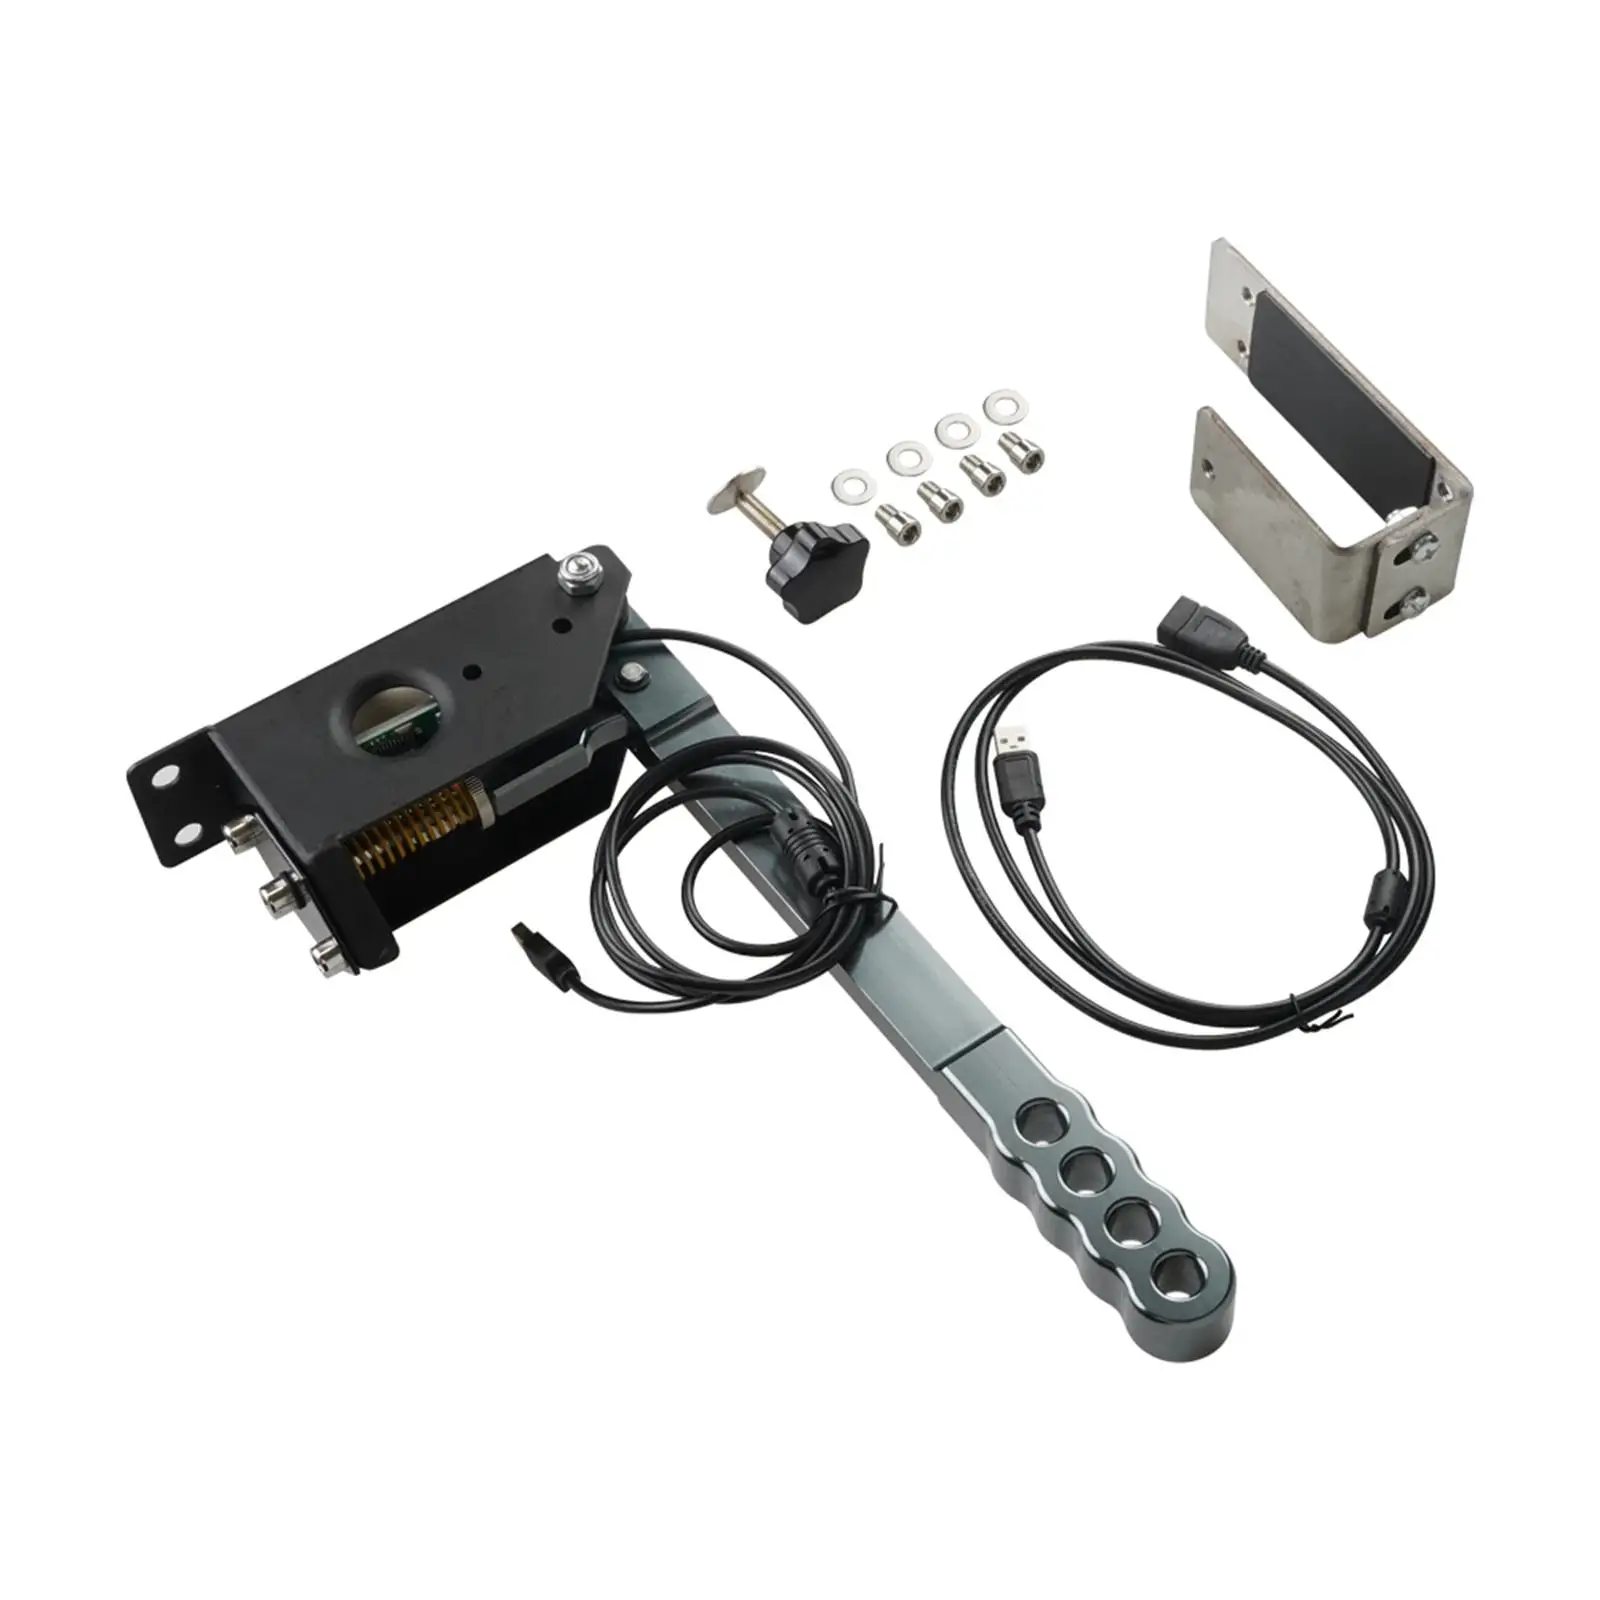 Handbrake USB with Fixing Clip Adjustable Premium Hall Sensor Handbrake Clamp for Logitech G29 Racing Games G27 G25 PC